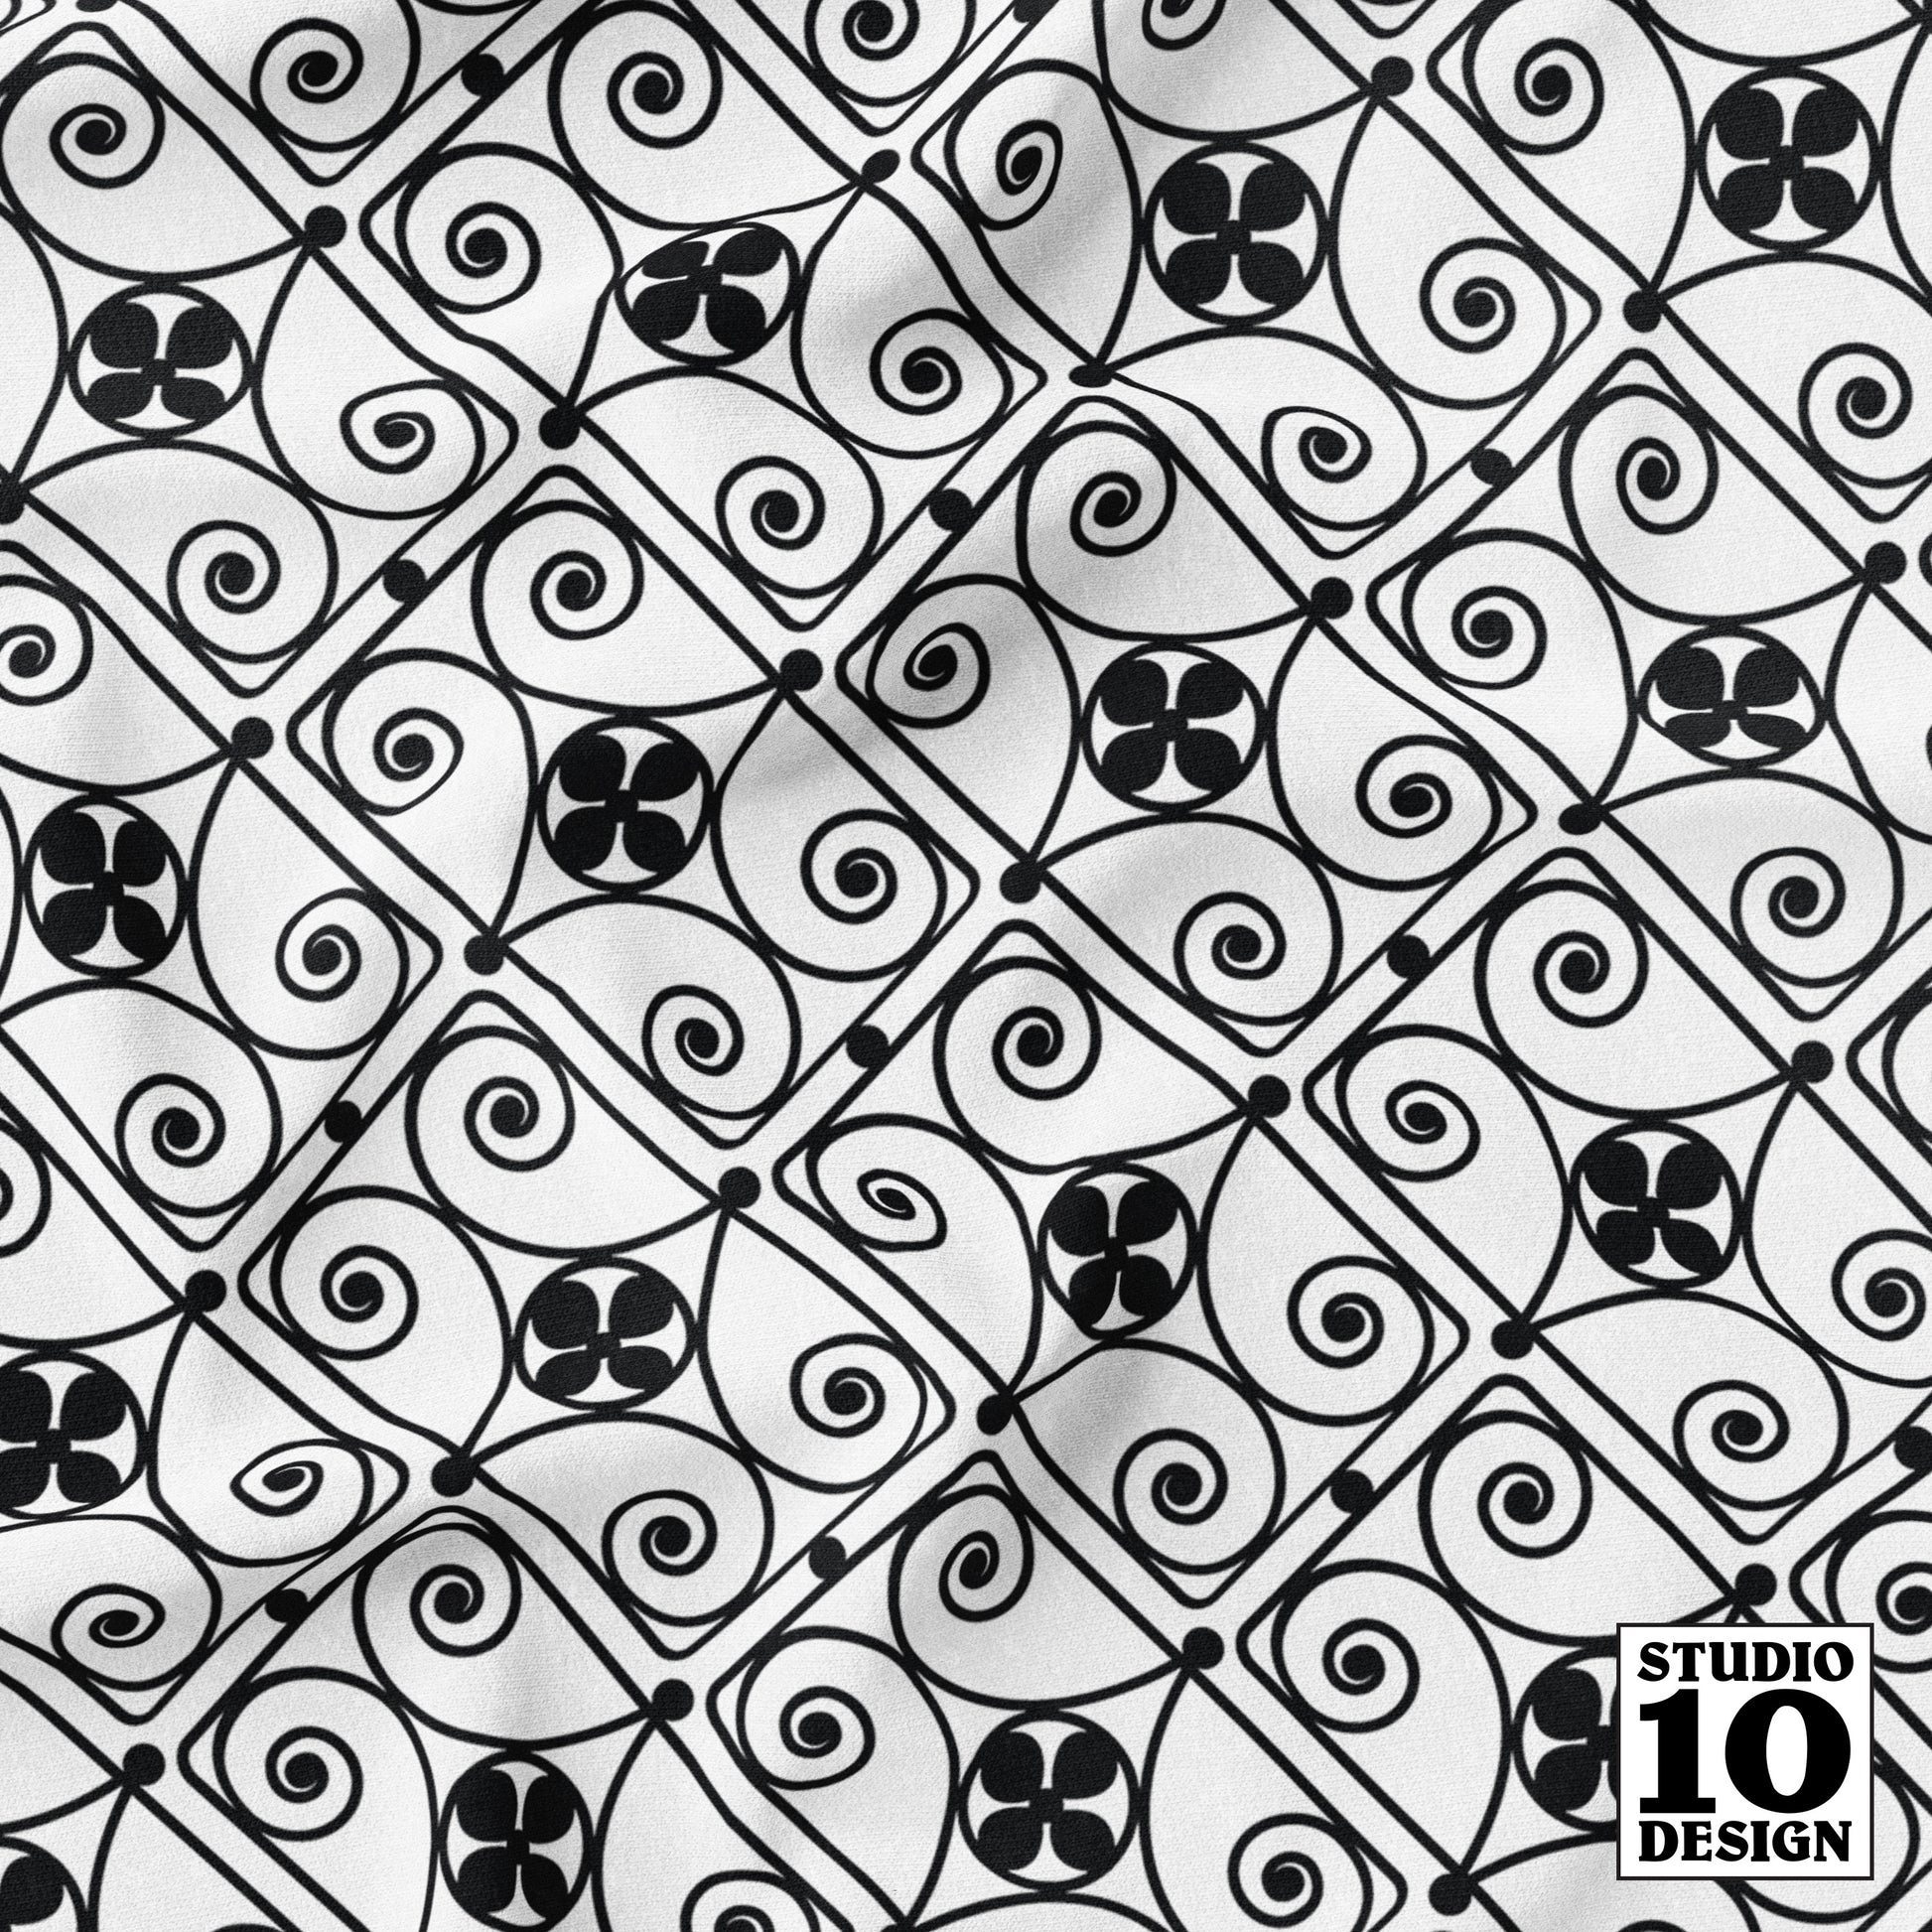 Ironwork Grille, Bias (Black, White) Printed Fabric by Studio Ten Design